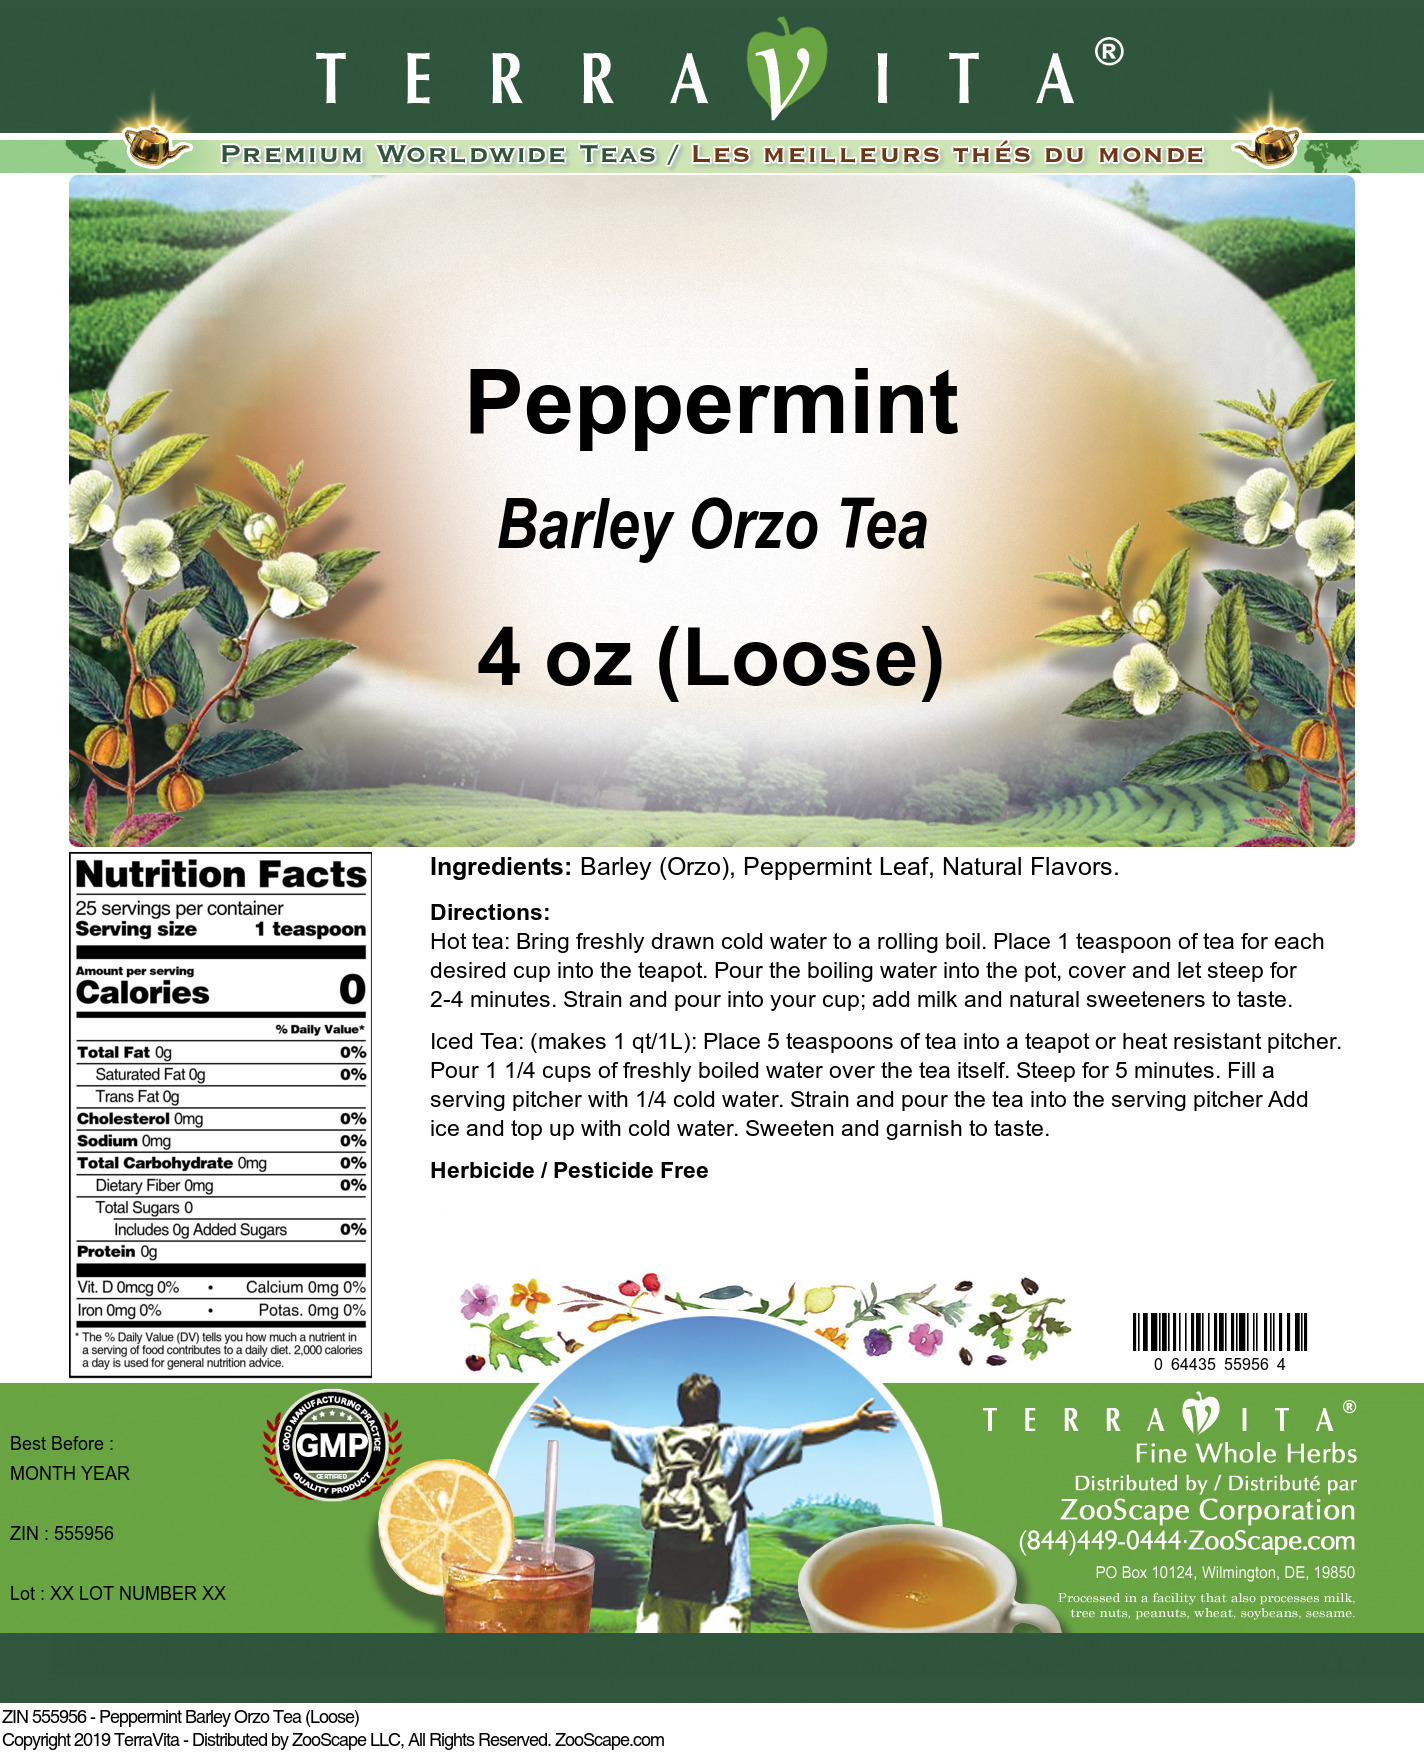 Peppermint Barley Orzo Tea (Loose) - Label